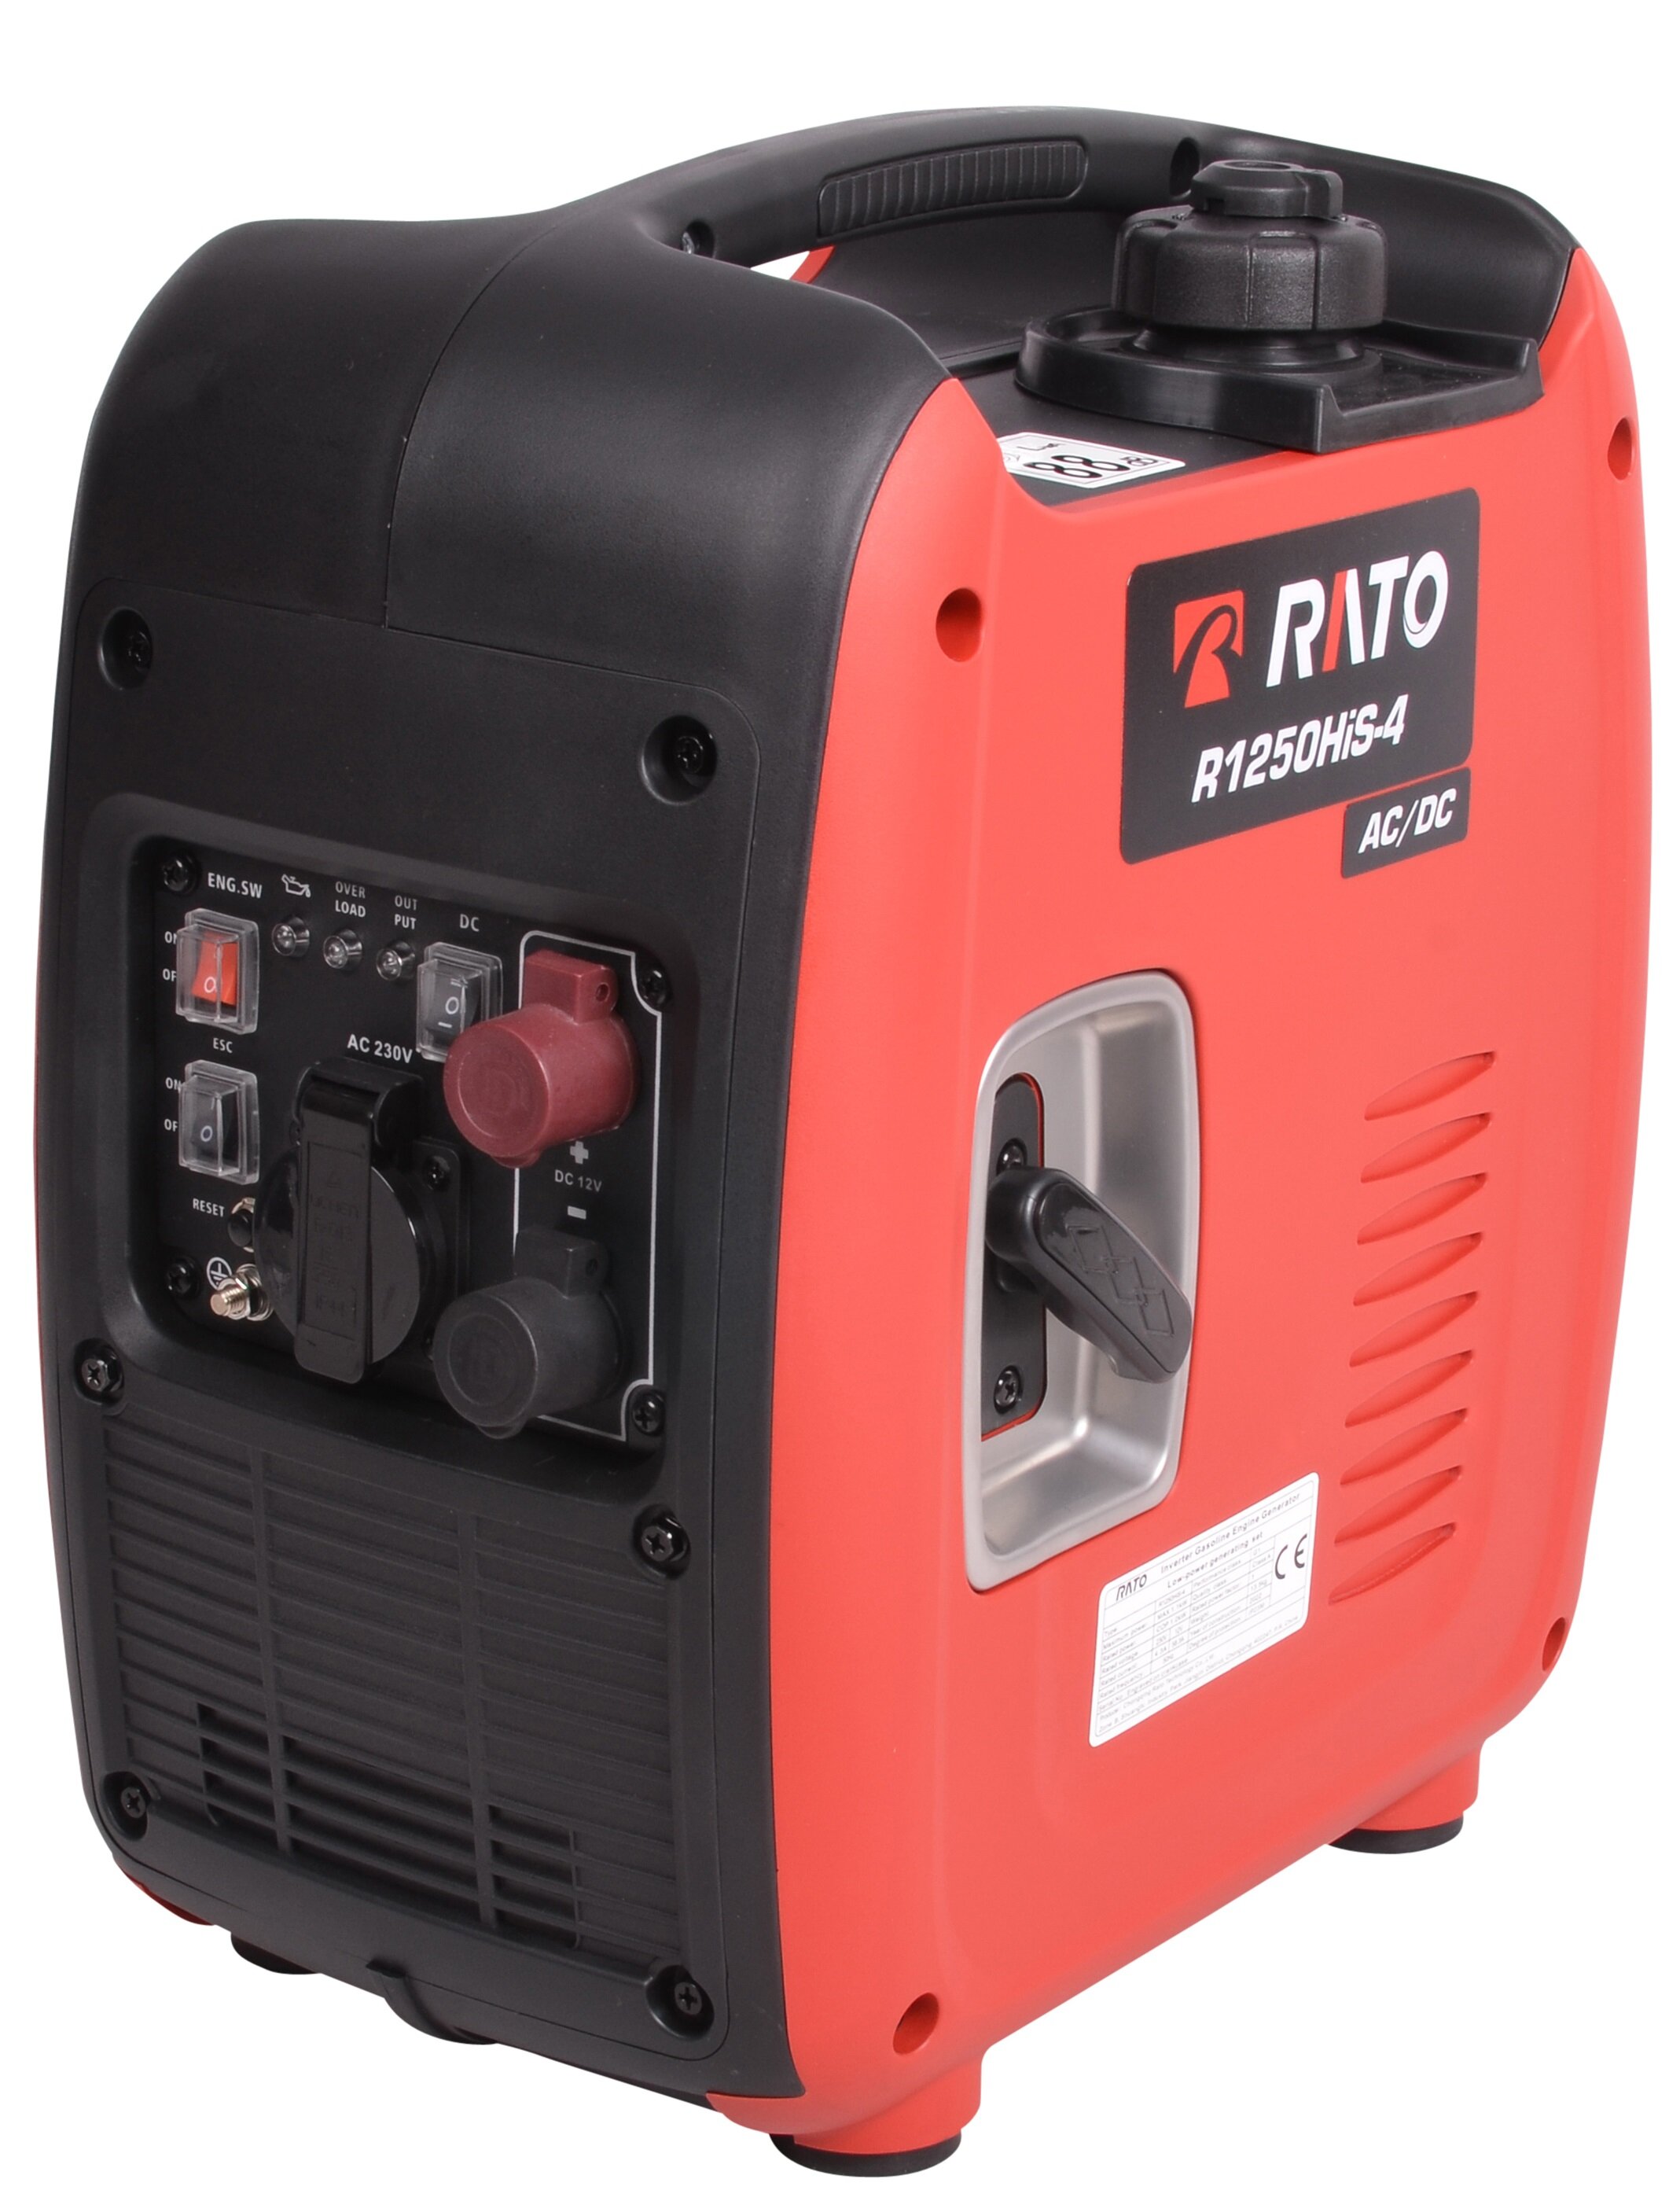 Agregat prądotwórczy RATO R1250HIS-4 AC DC 1,1 KW